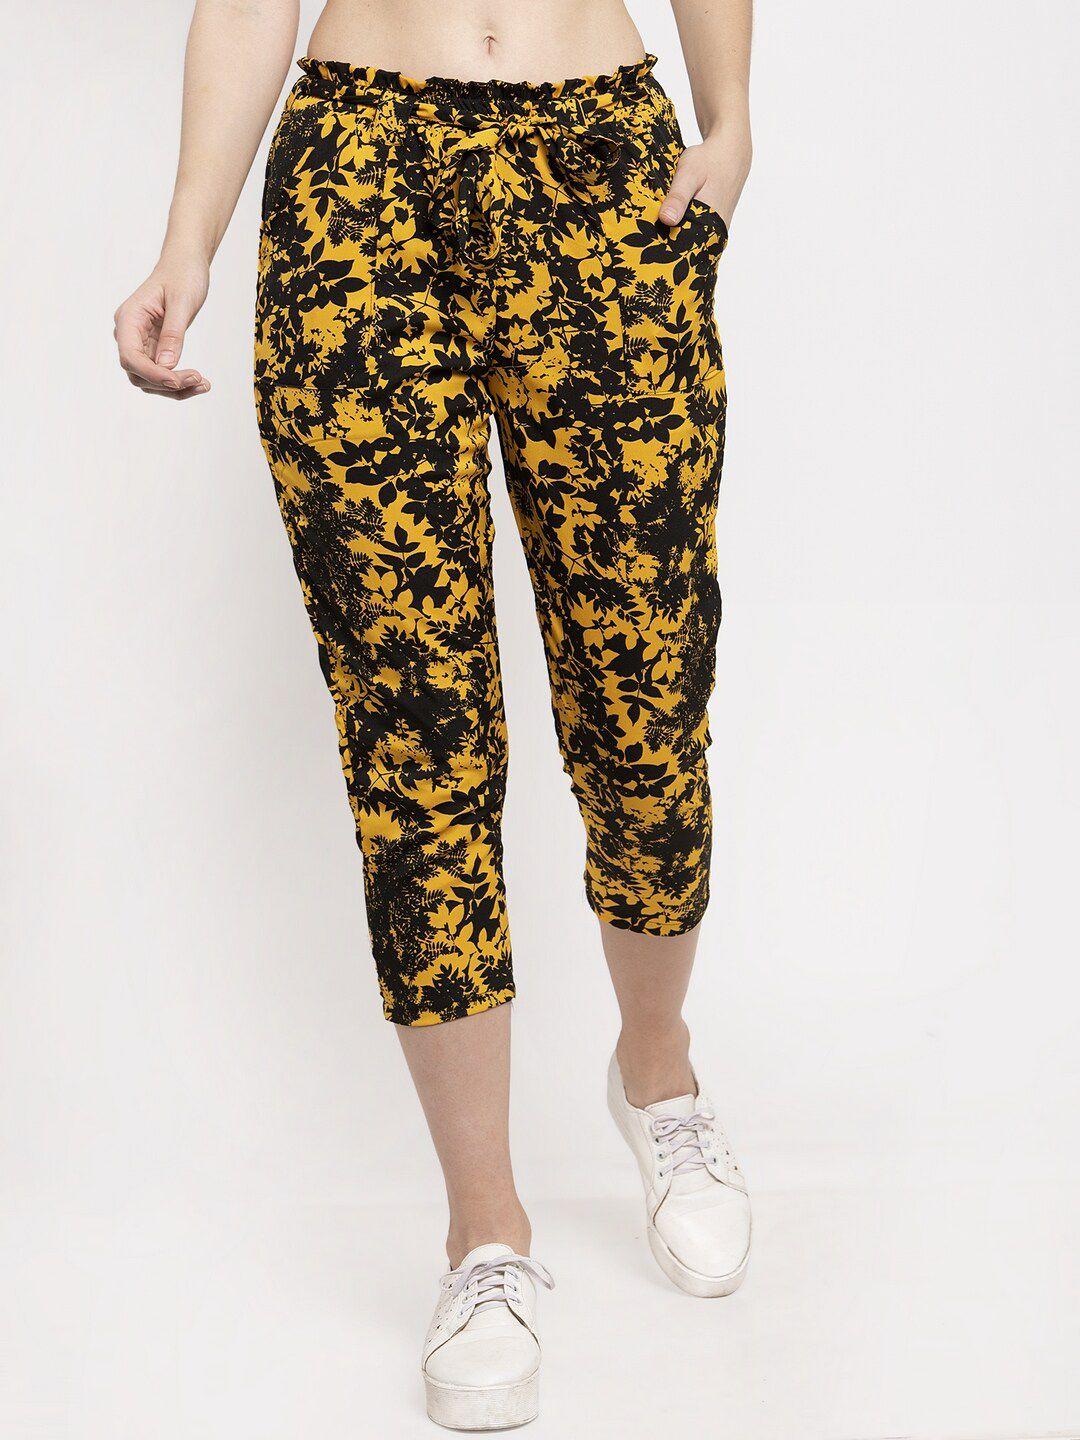 j style women yellow & black floral printed slim fit capris